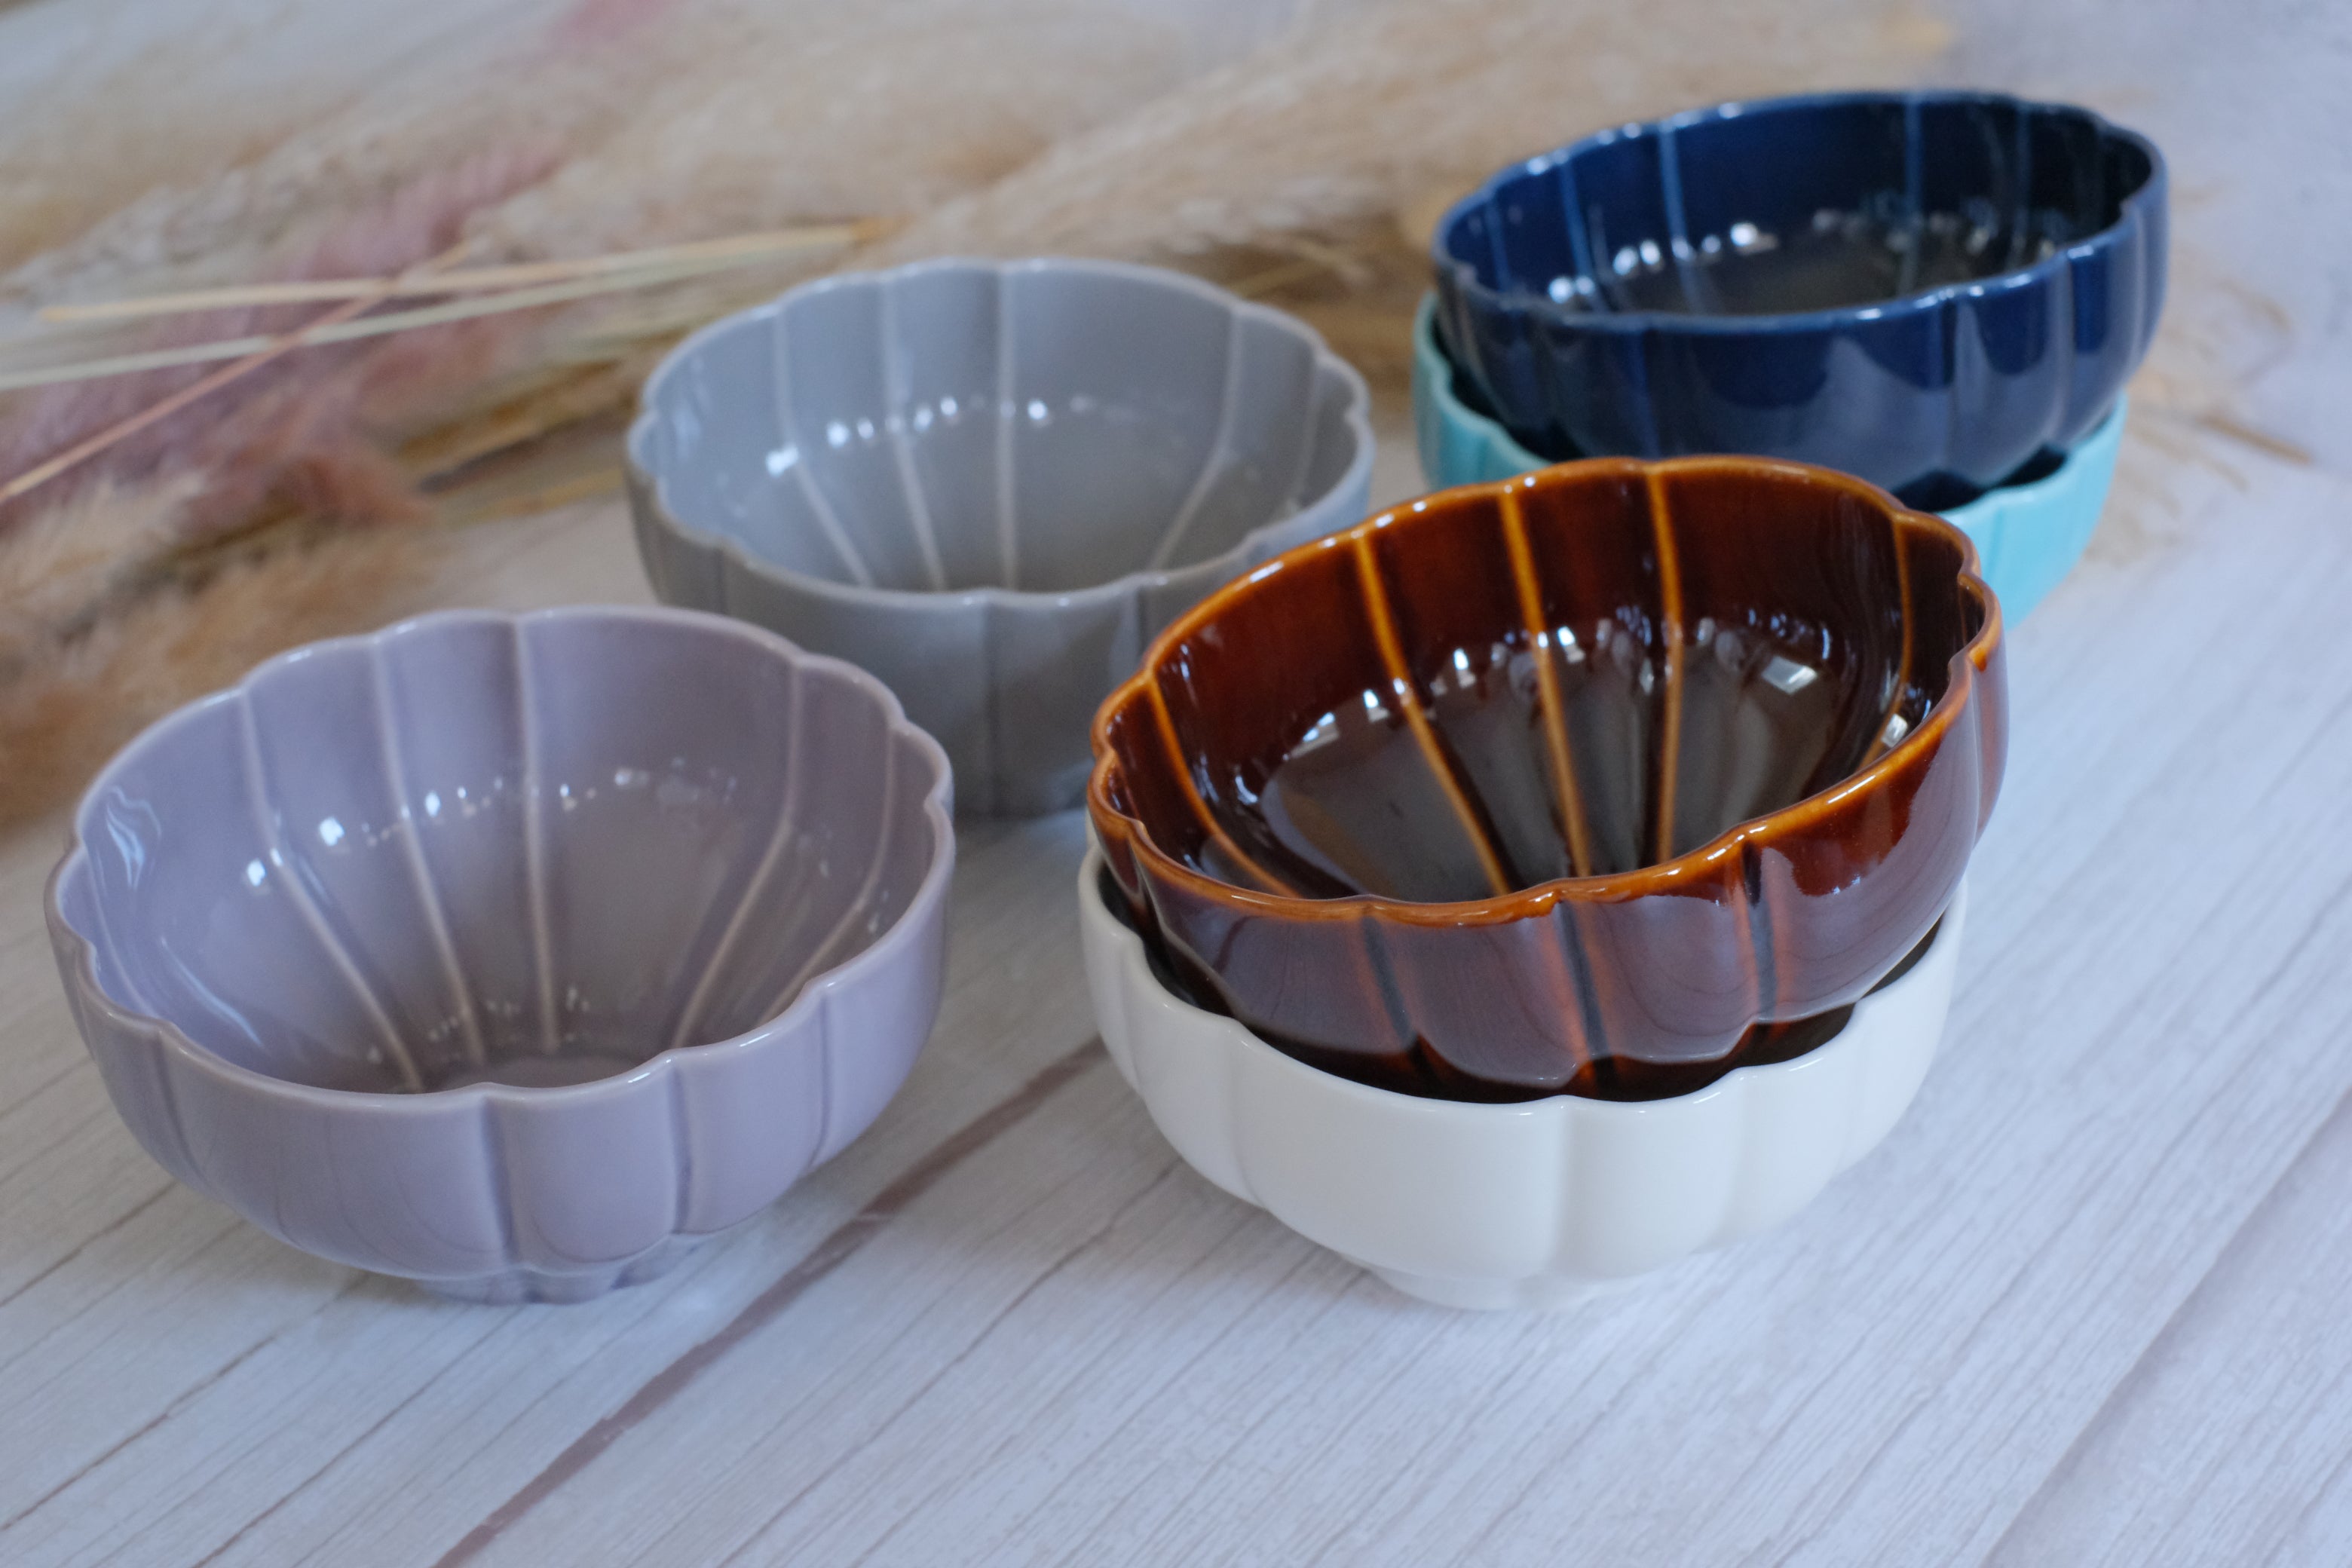 Tableware East - Candy Glaze 6 Piece Flower Rice Bowls